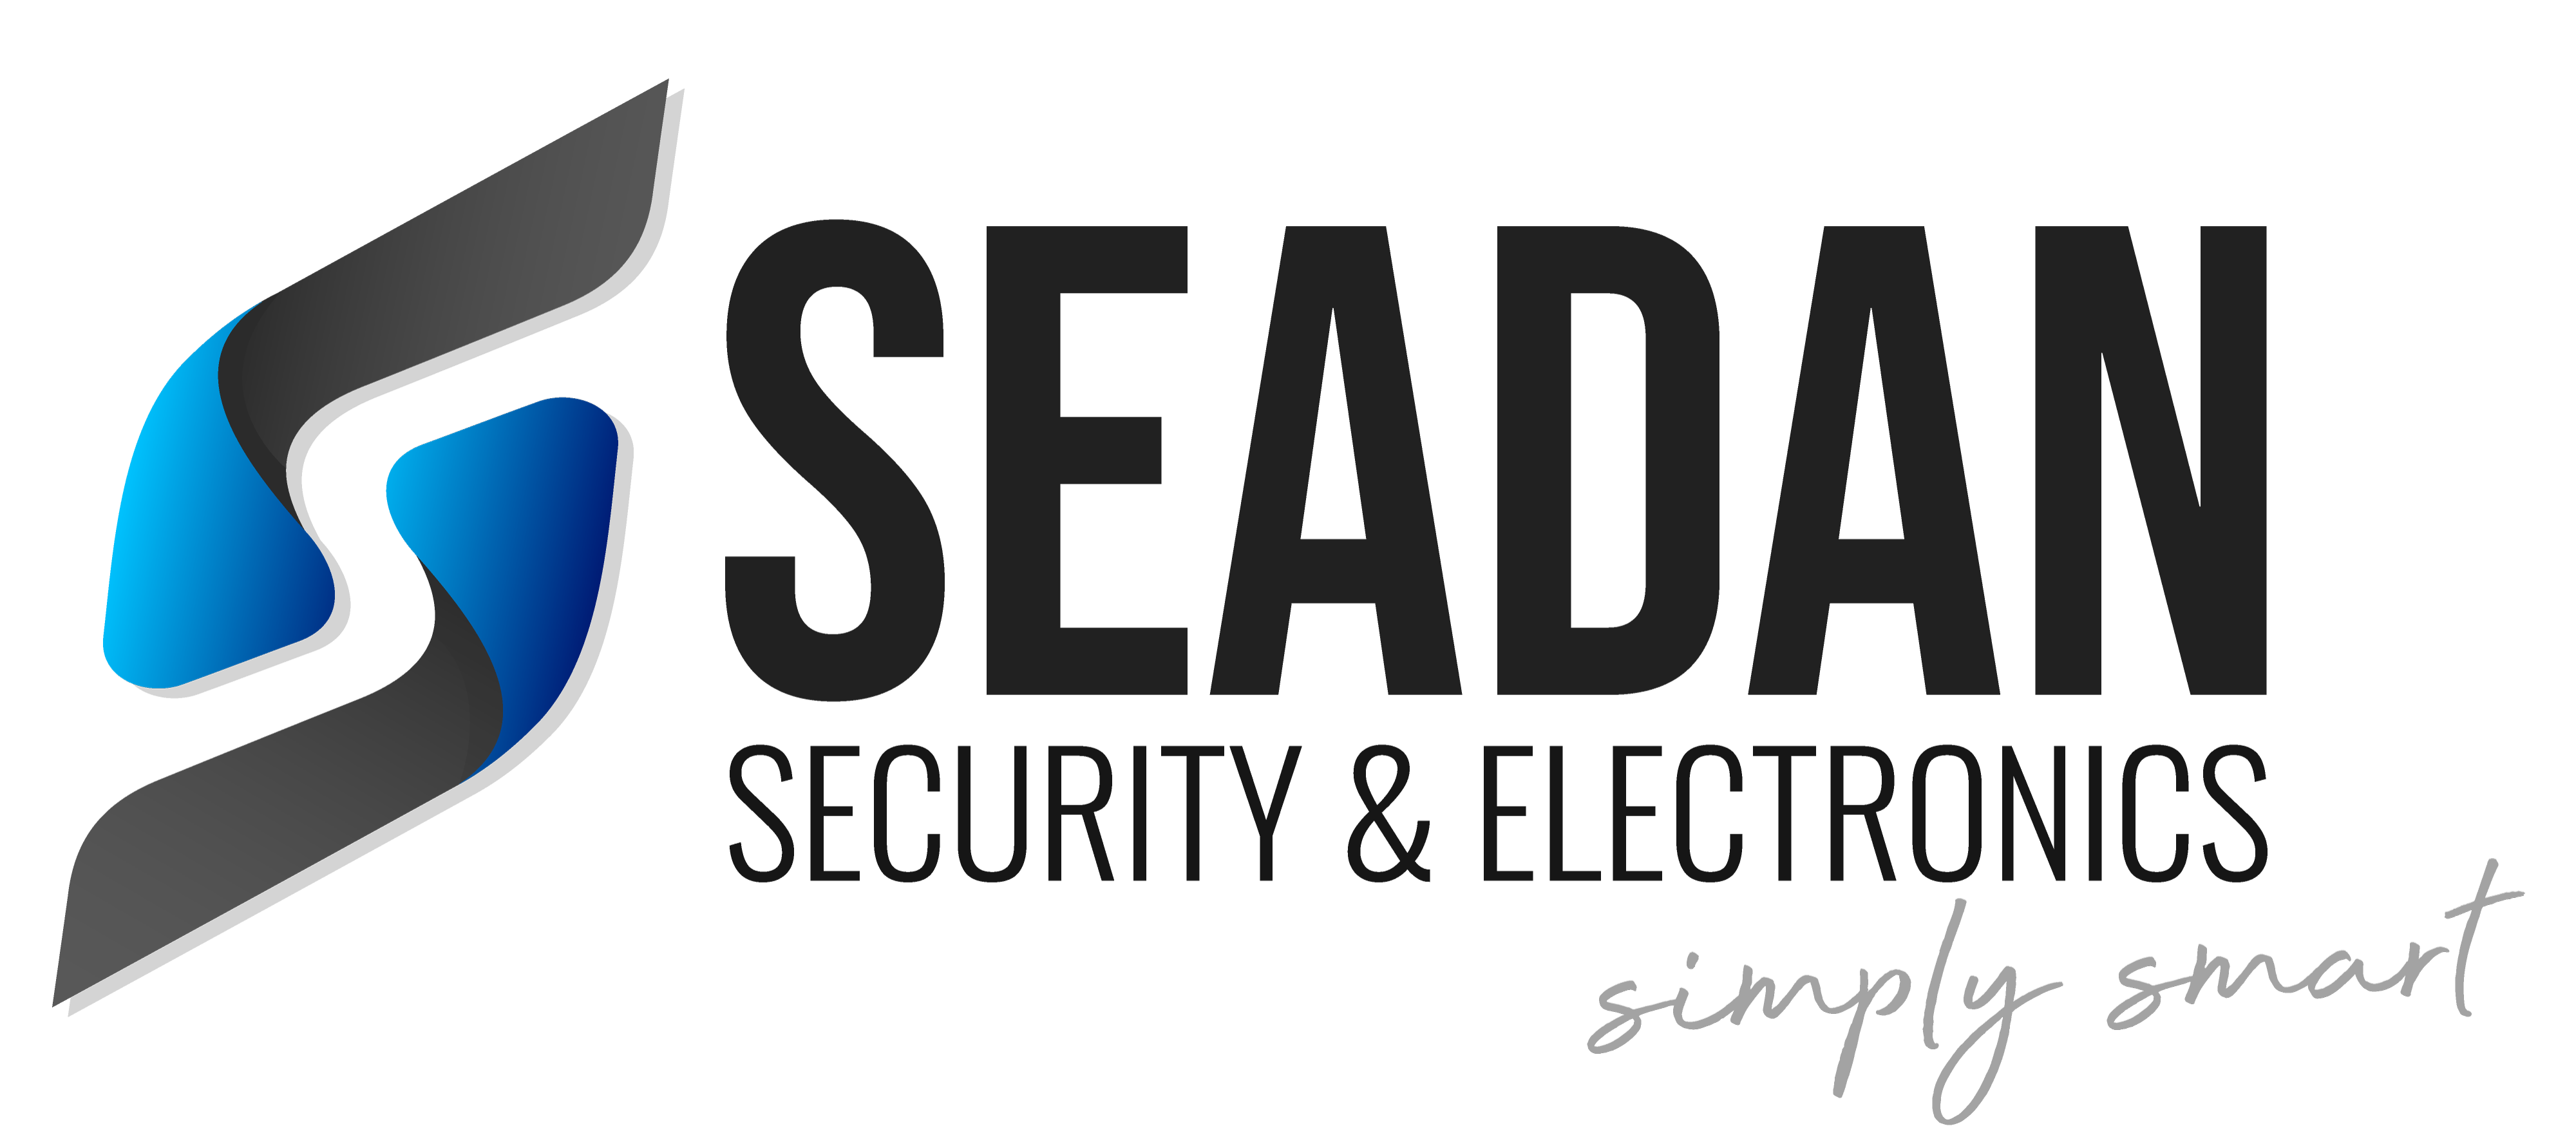 Seadan Security & Electronics Logo